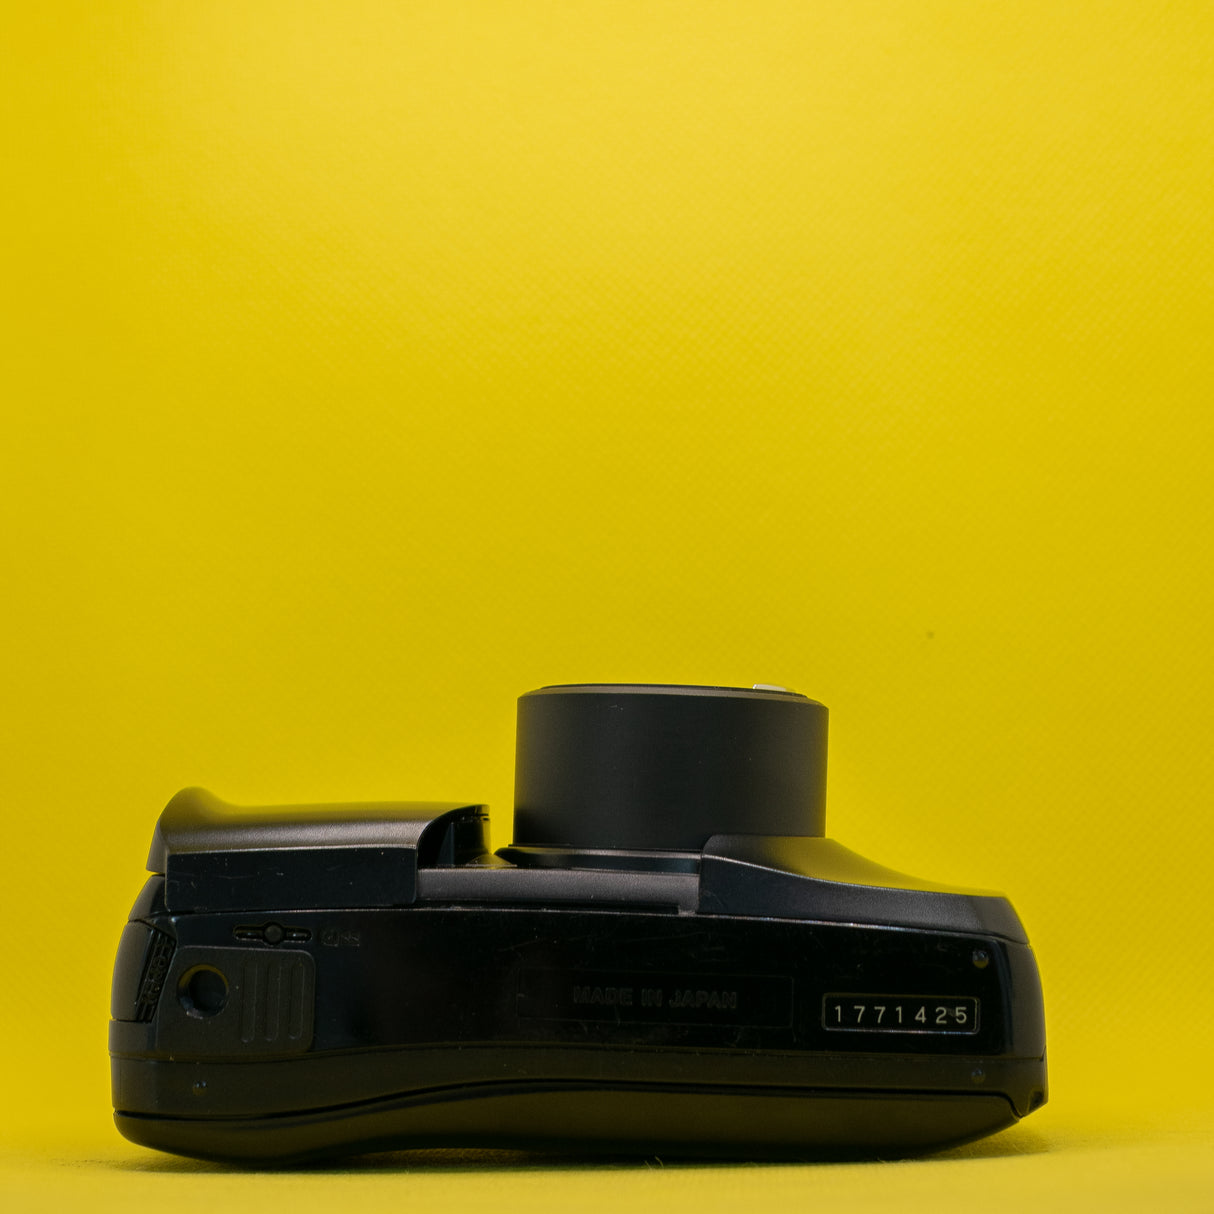 Fotocamera compatta Olympus MJU Zoom 115-35mm